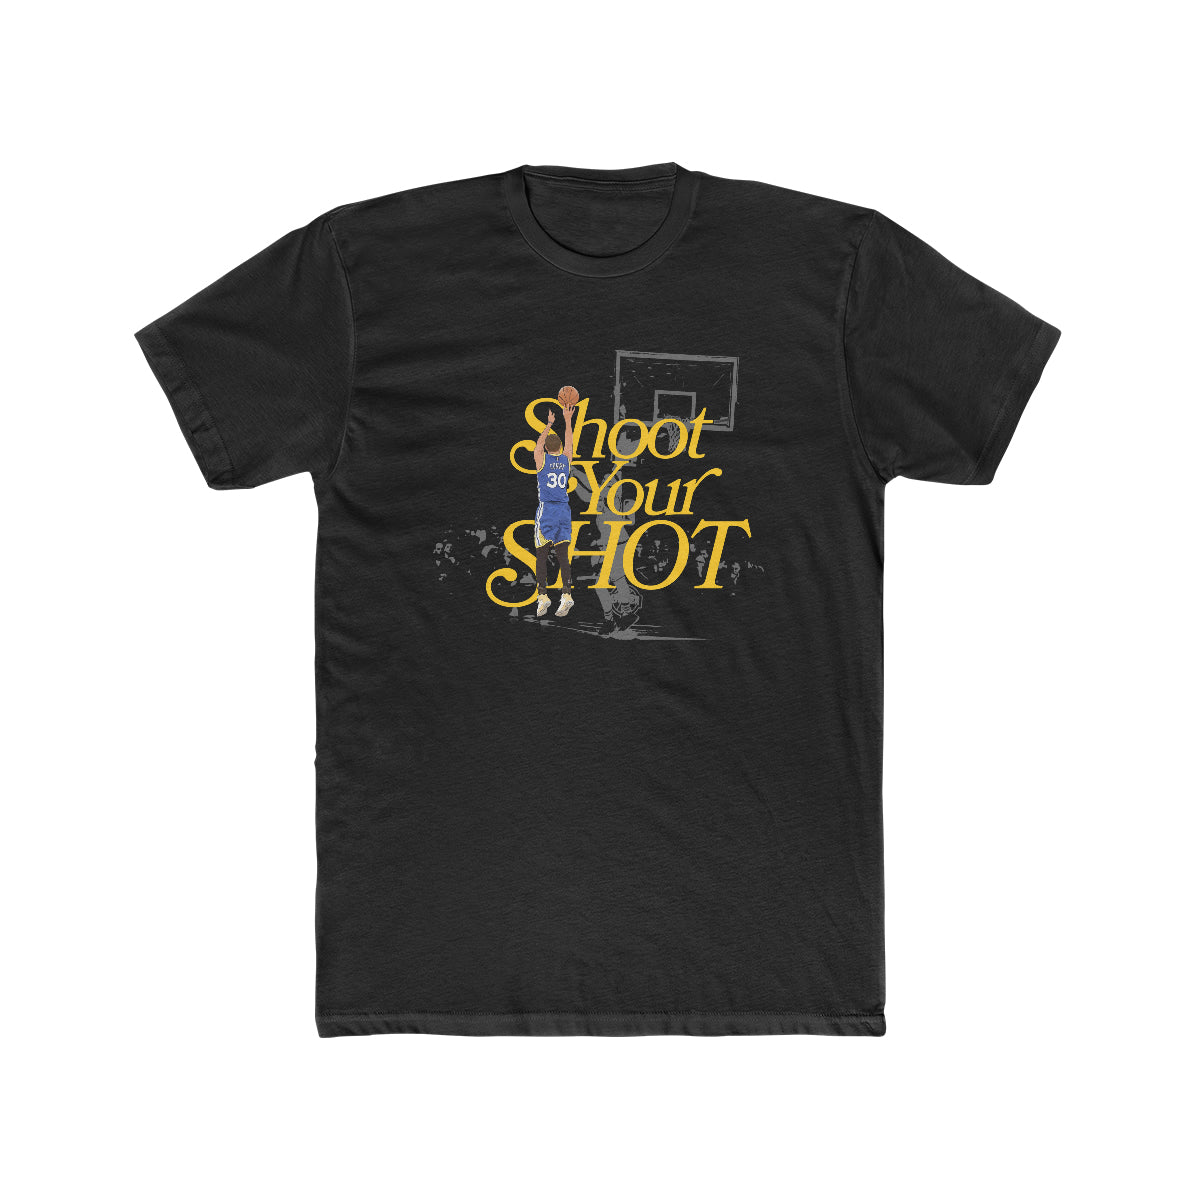 Steph Shoot Your Shot Tee